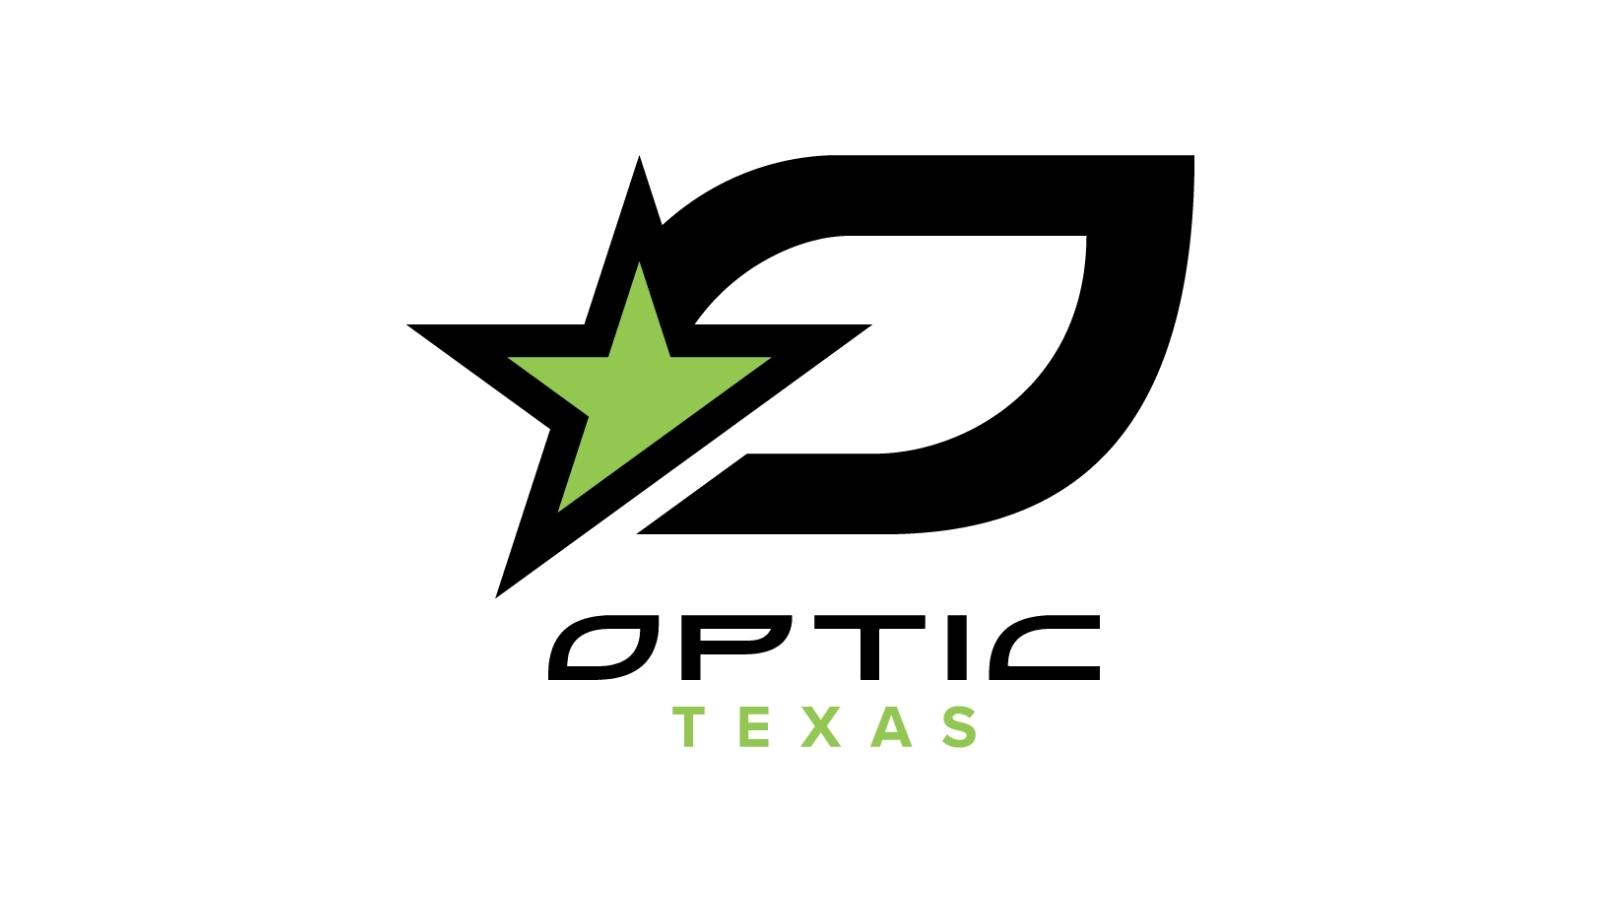 OpTic Texas on X: Tomorrow. #BrickByBrick